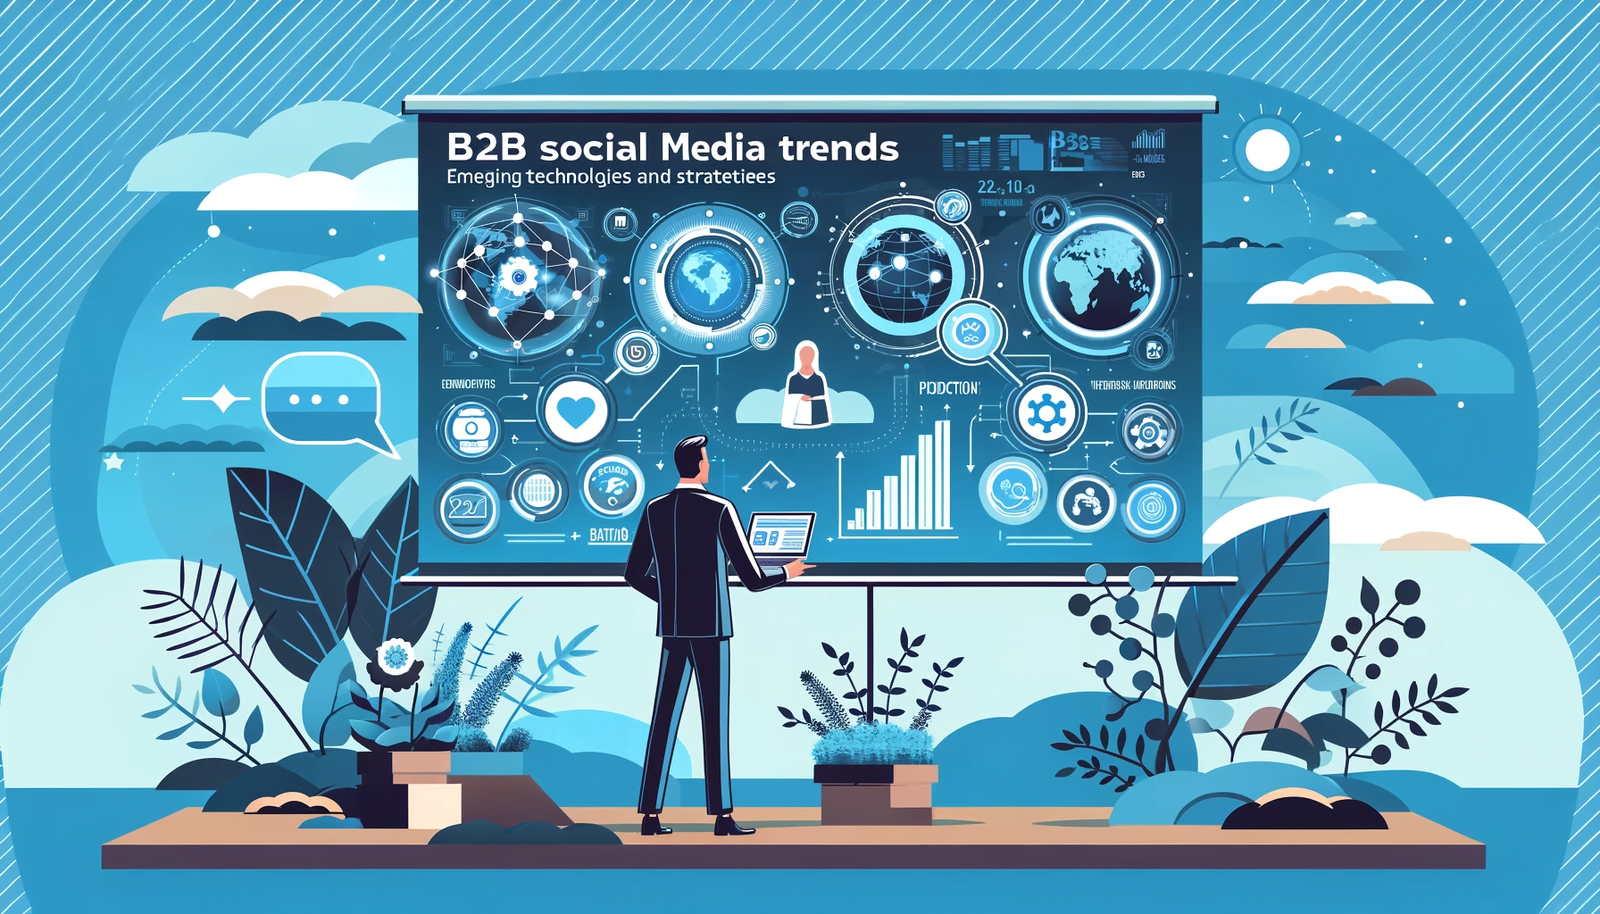 Professional presentation on emerging B2B social media trends and strategies.